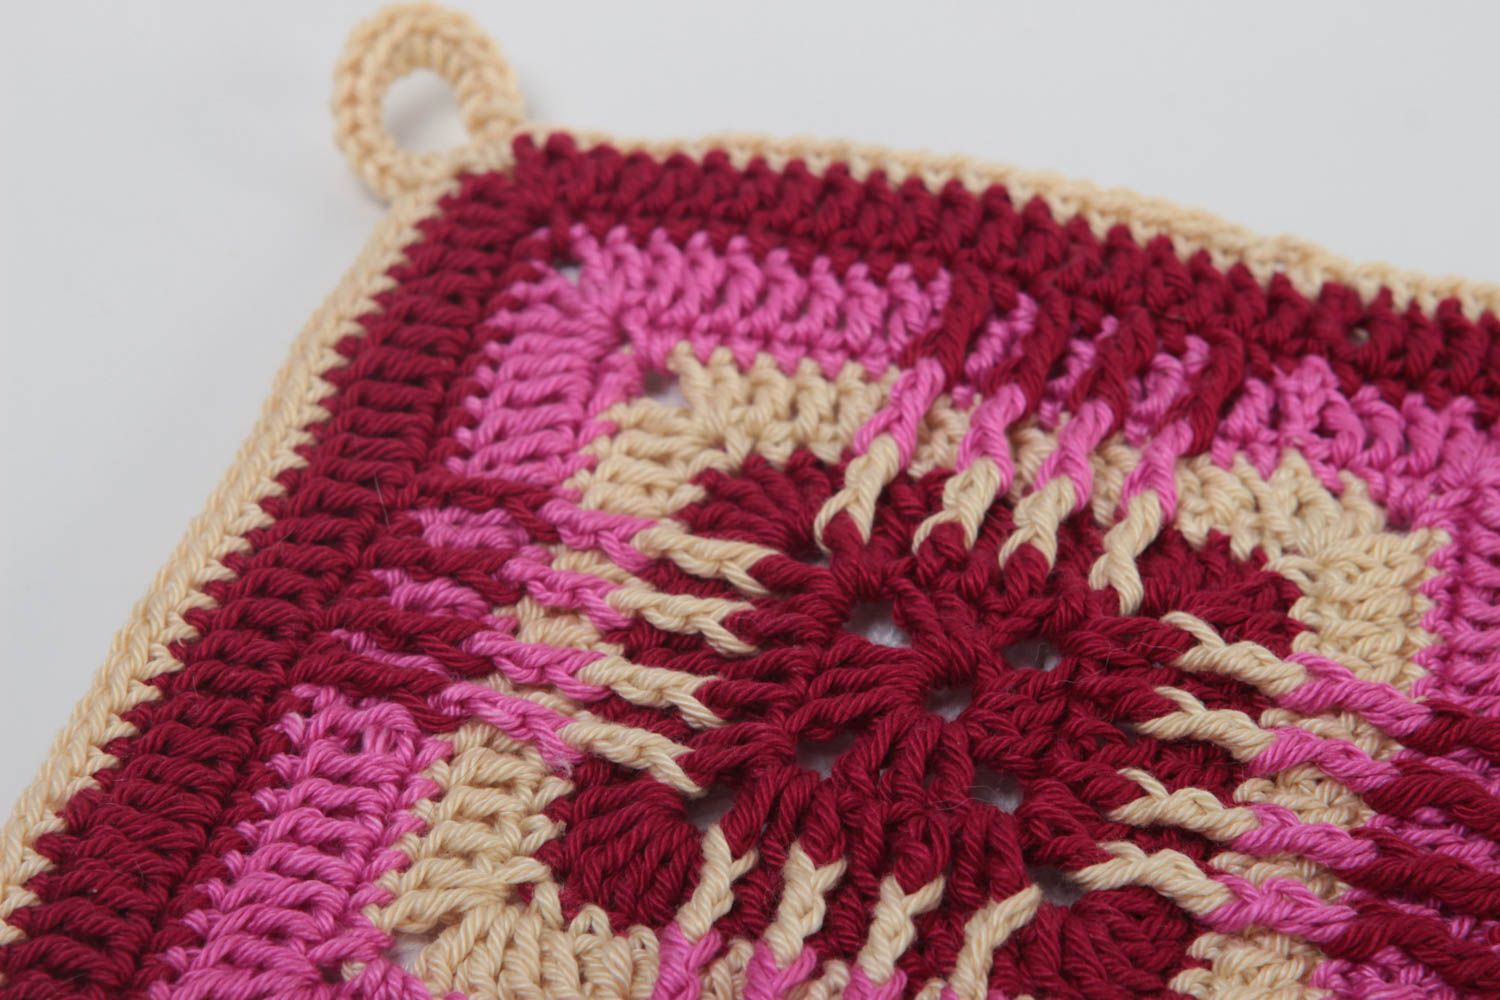 Unusual handmade pot holder decorative crochet potholder the kitchen gift ideas photo 3